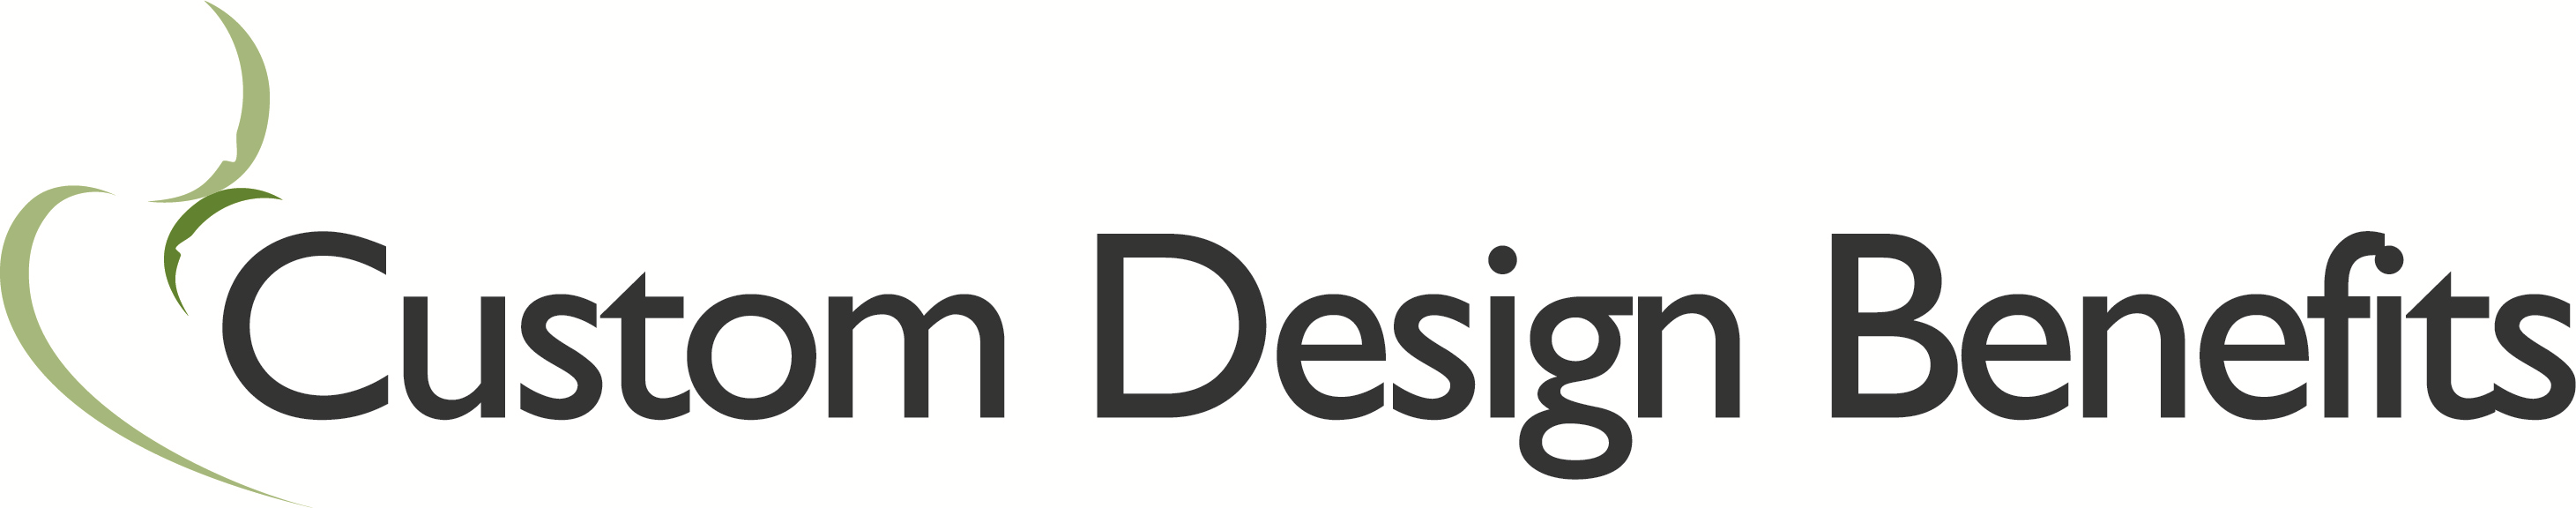 Custom Design Benefits logo